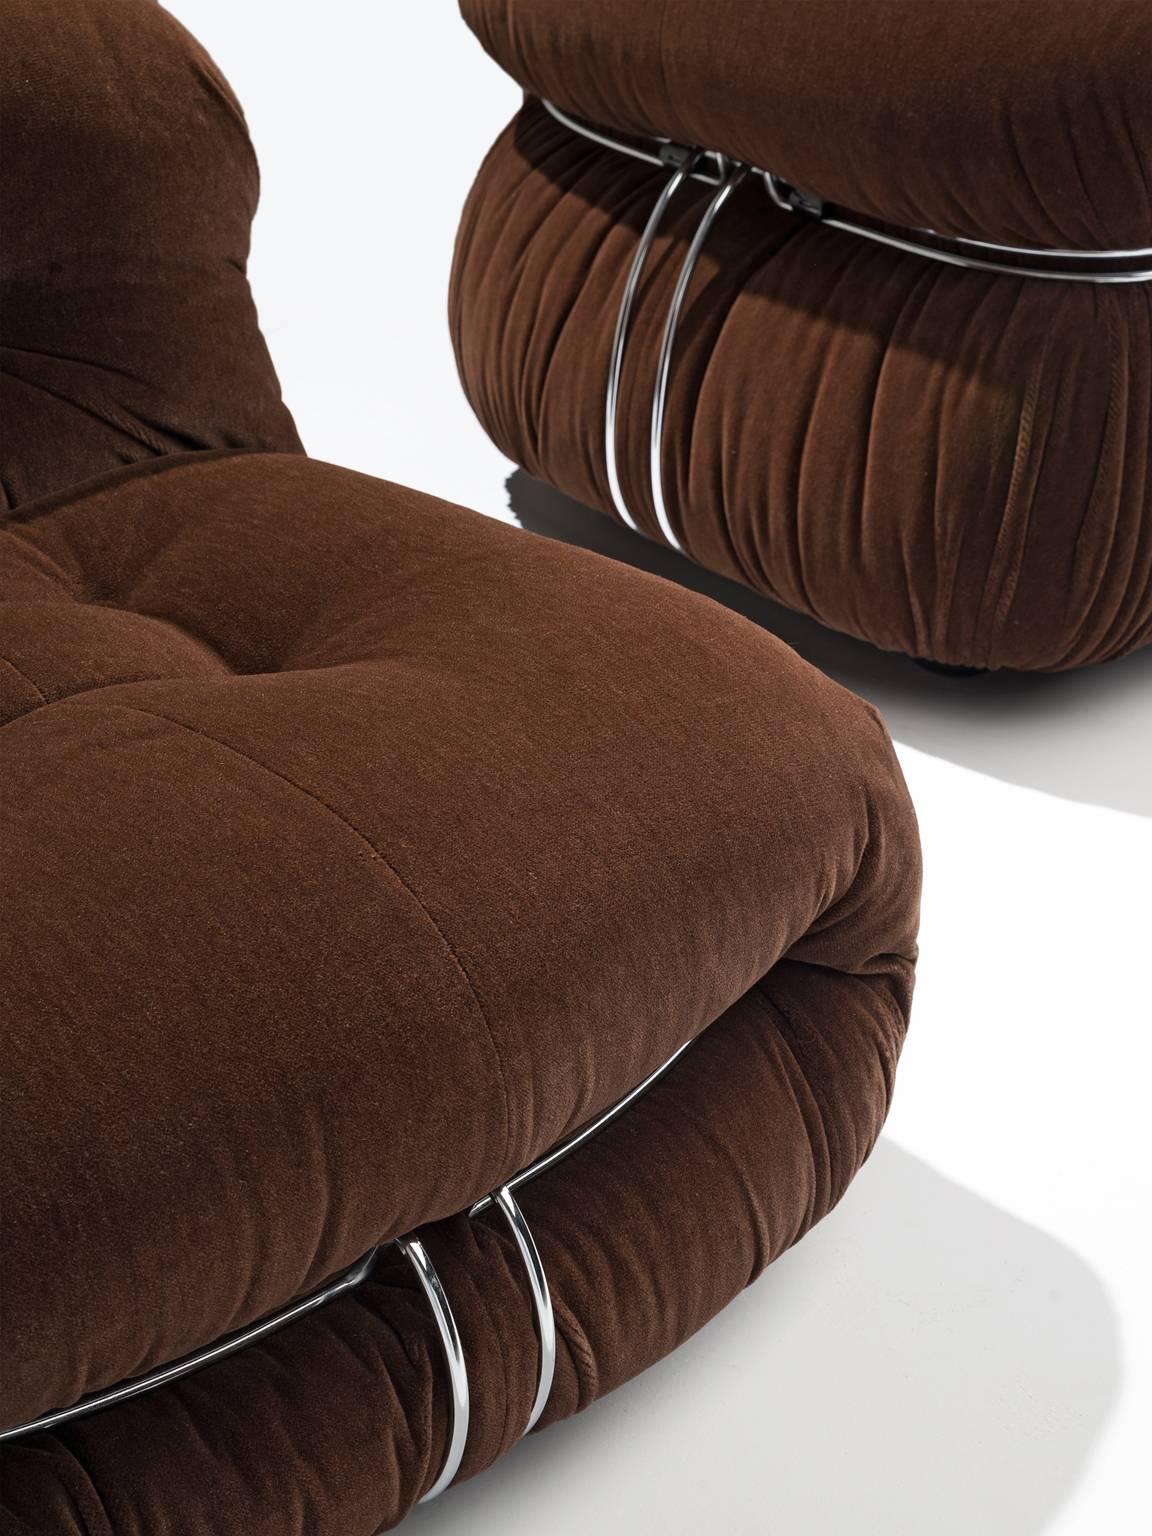 Afra & Tobia Scarpa 'Soriana' Lounge Chairs 1